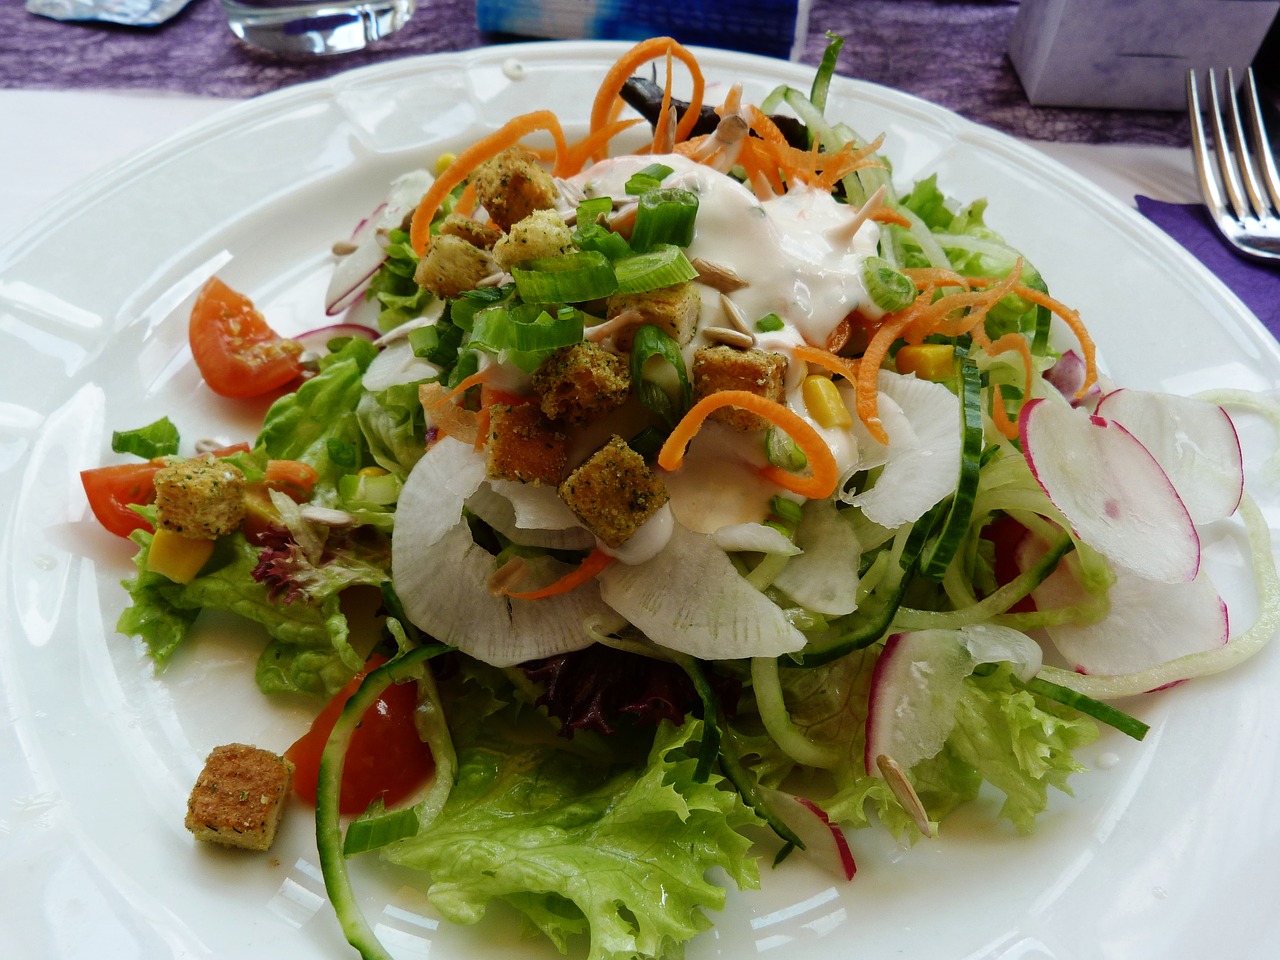 Woodloch Salad